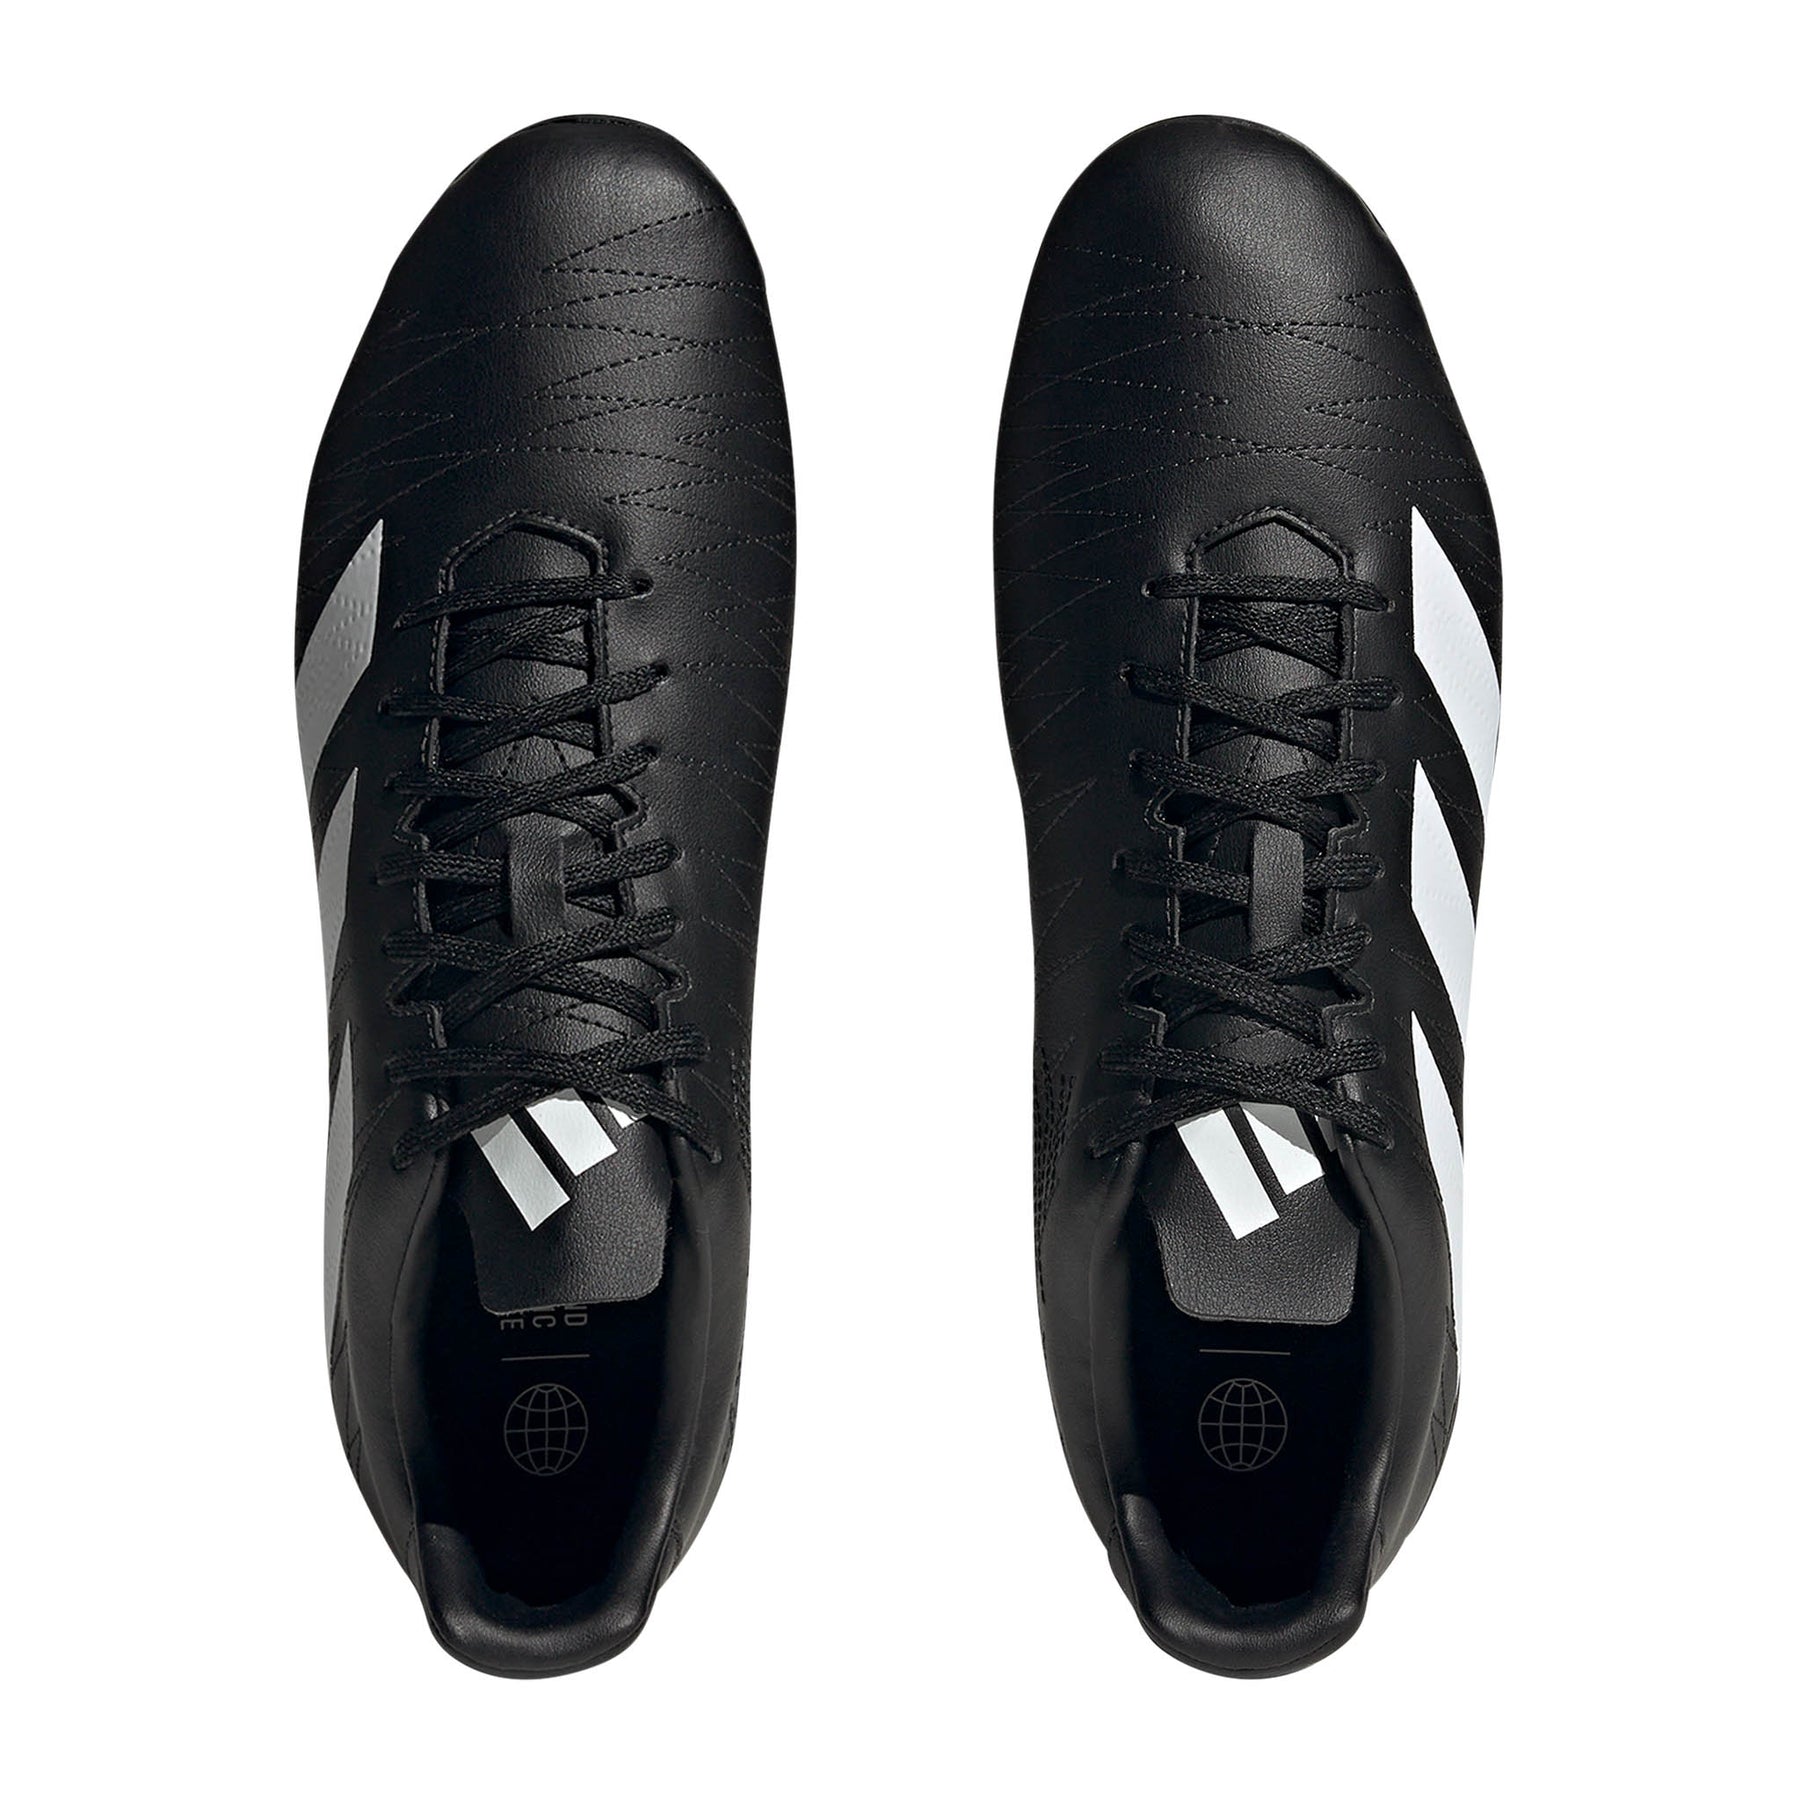 Adidas Kakari SG Rugby Boots 2023: Black